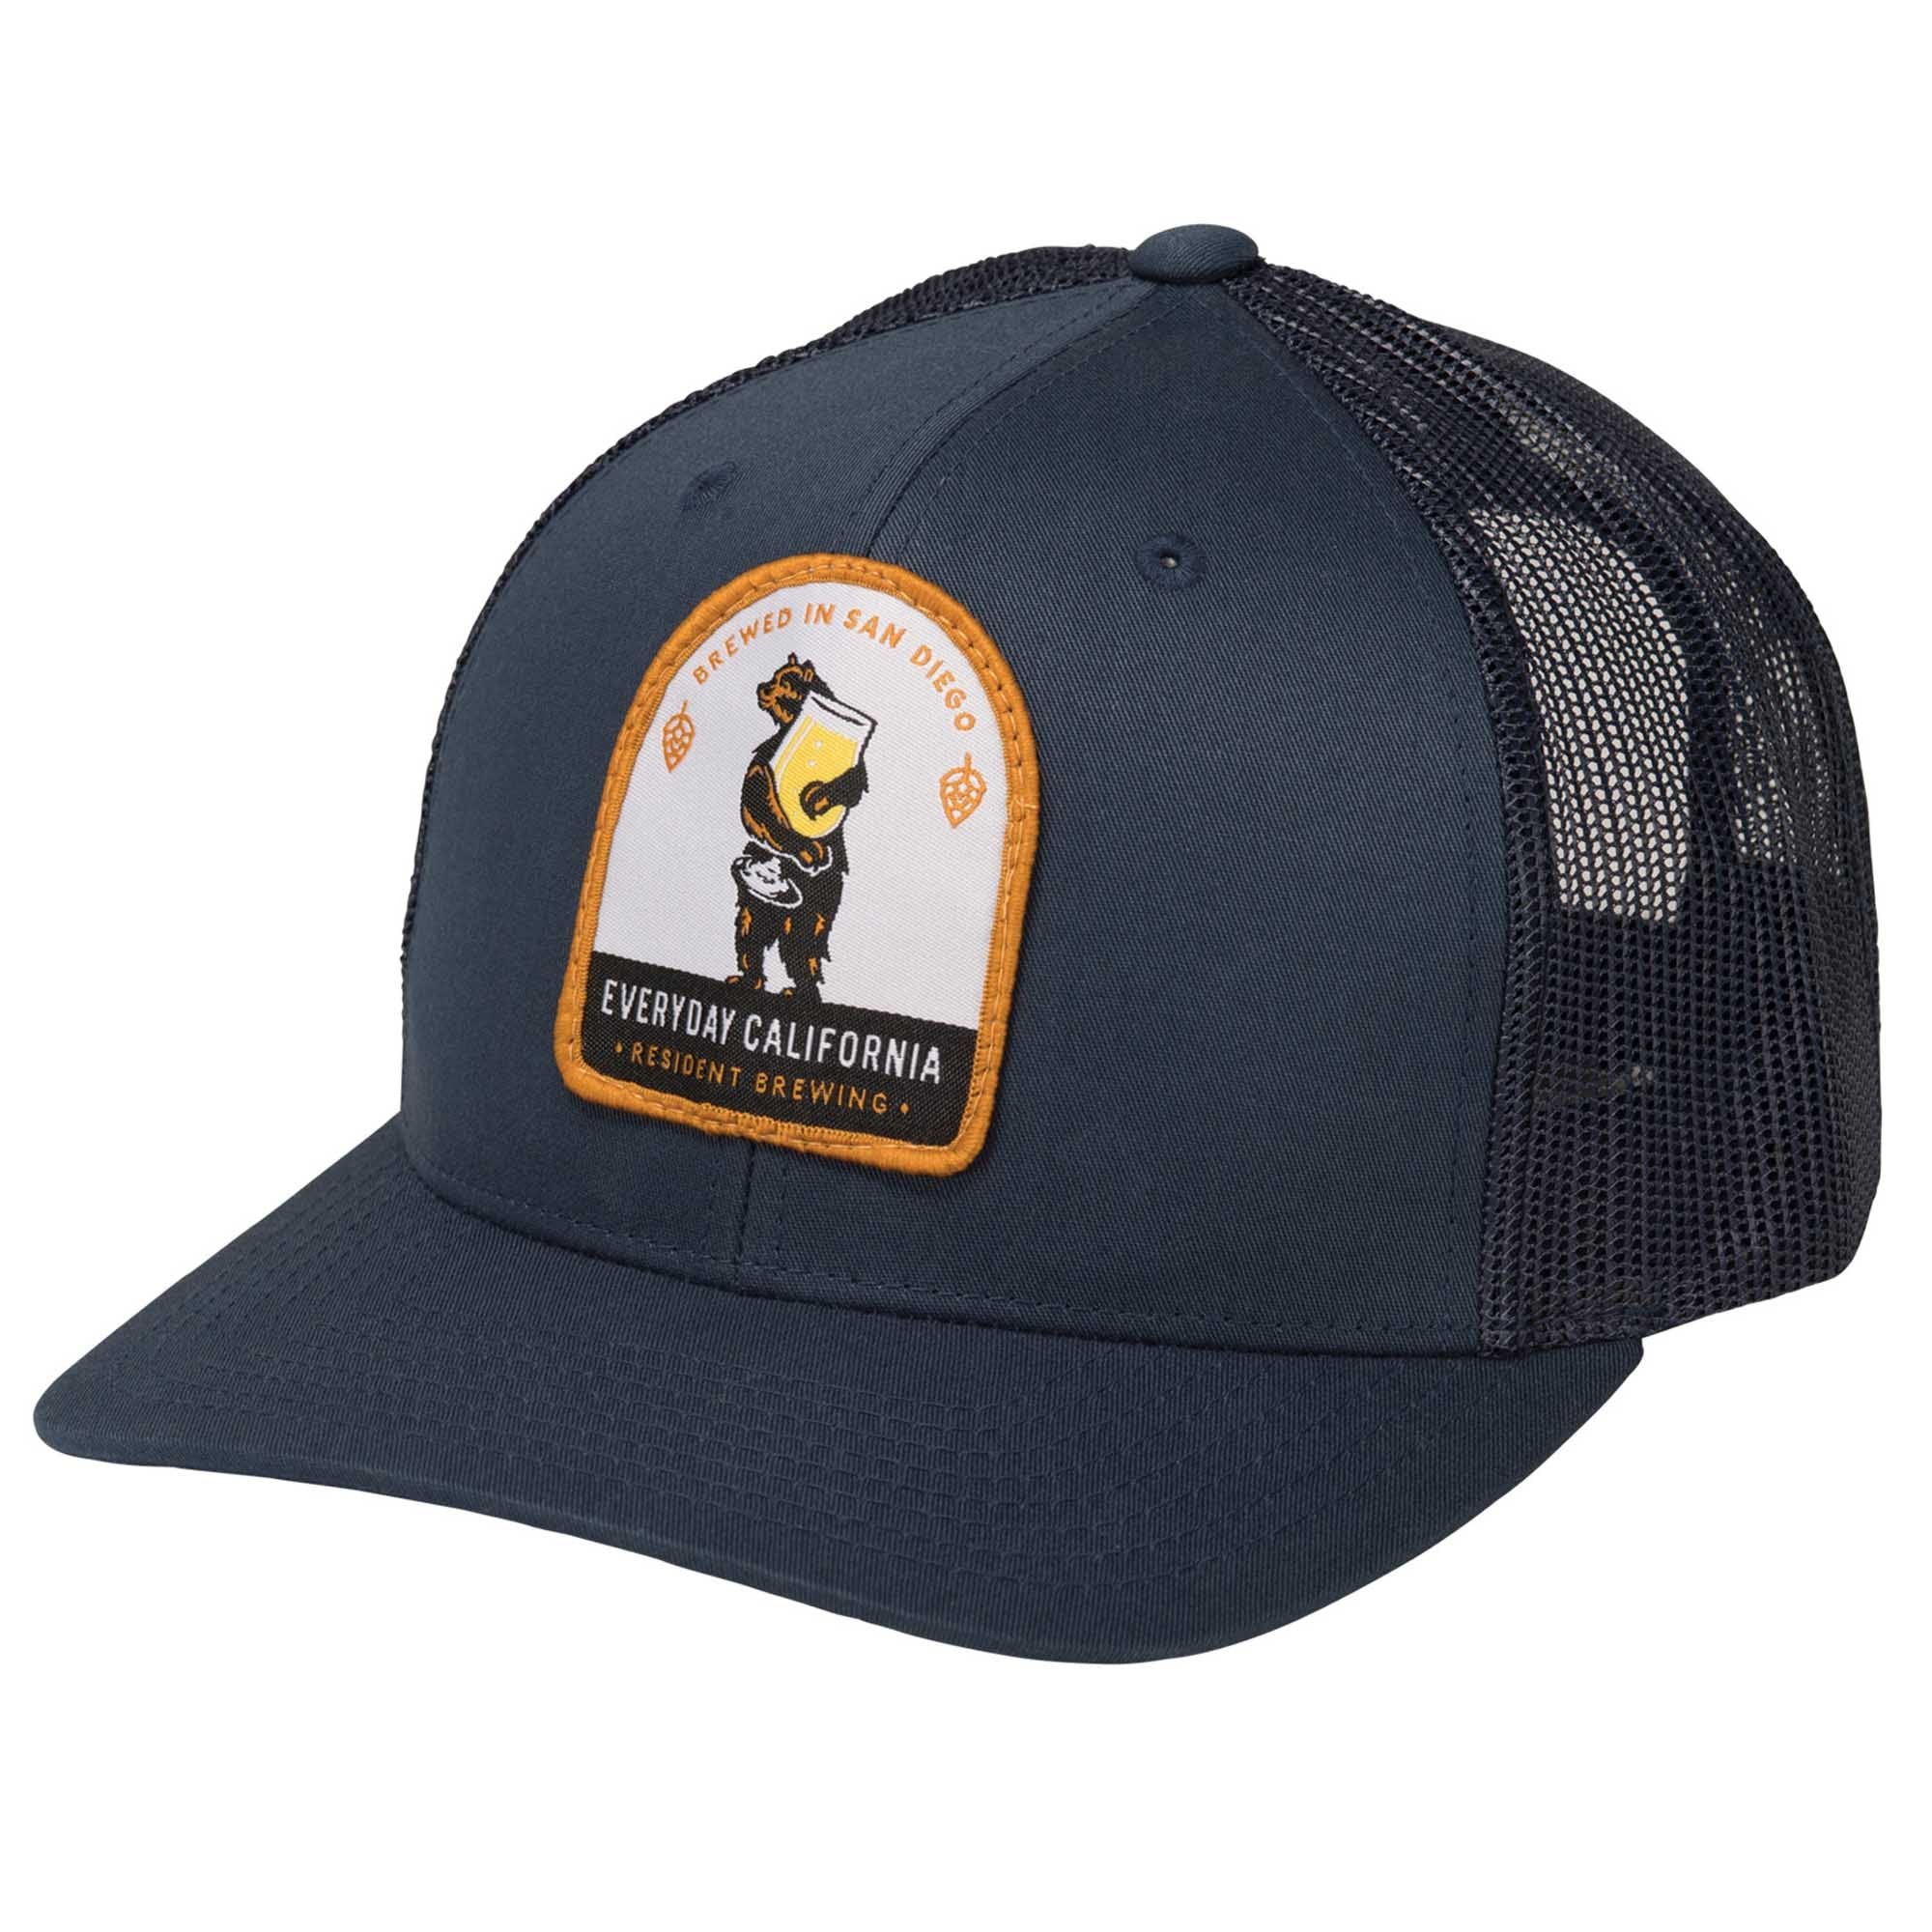 Everyday California Brewski Trucker Hat in Navy